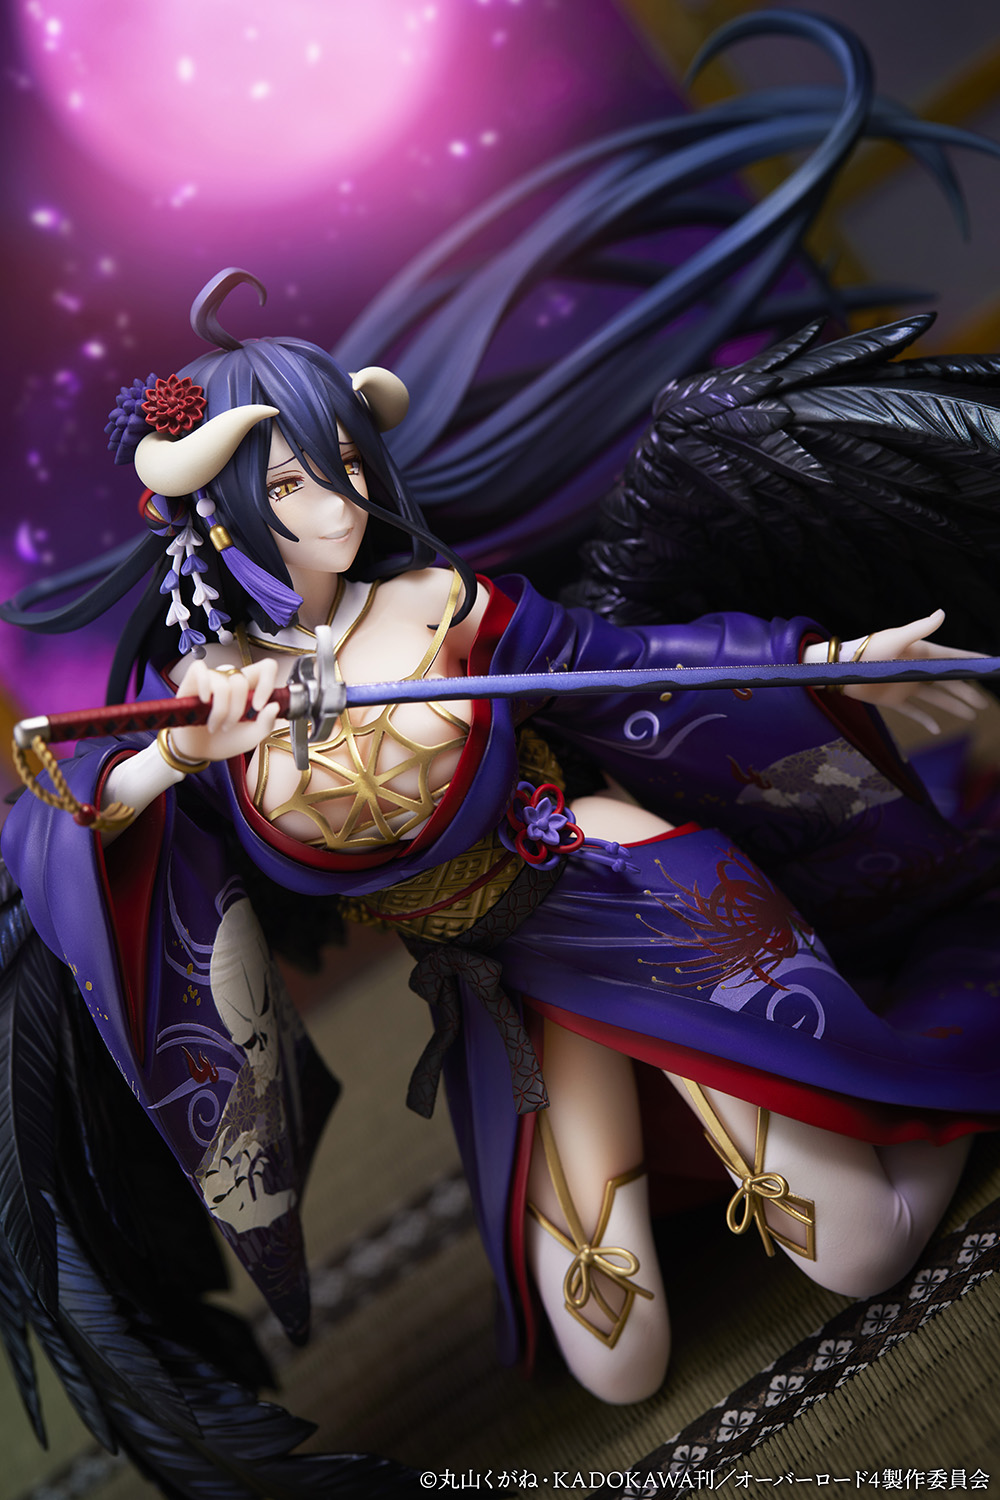 Overlord IV  13 Fin  Princess FrontRenner  RABUJOI  An Anime Blog